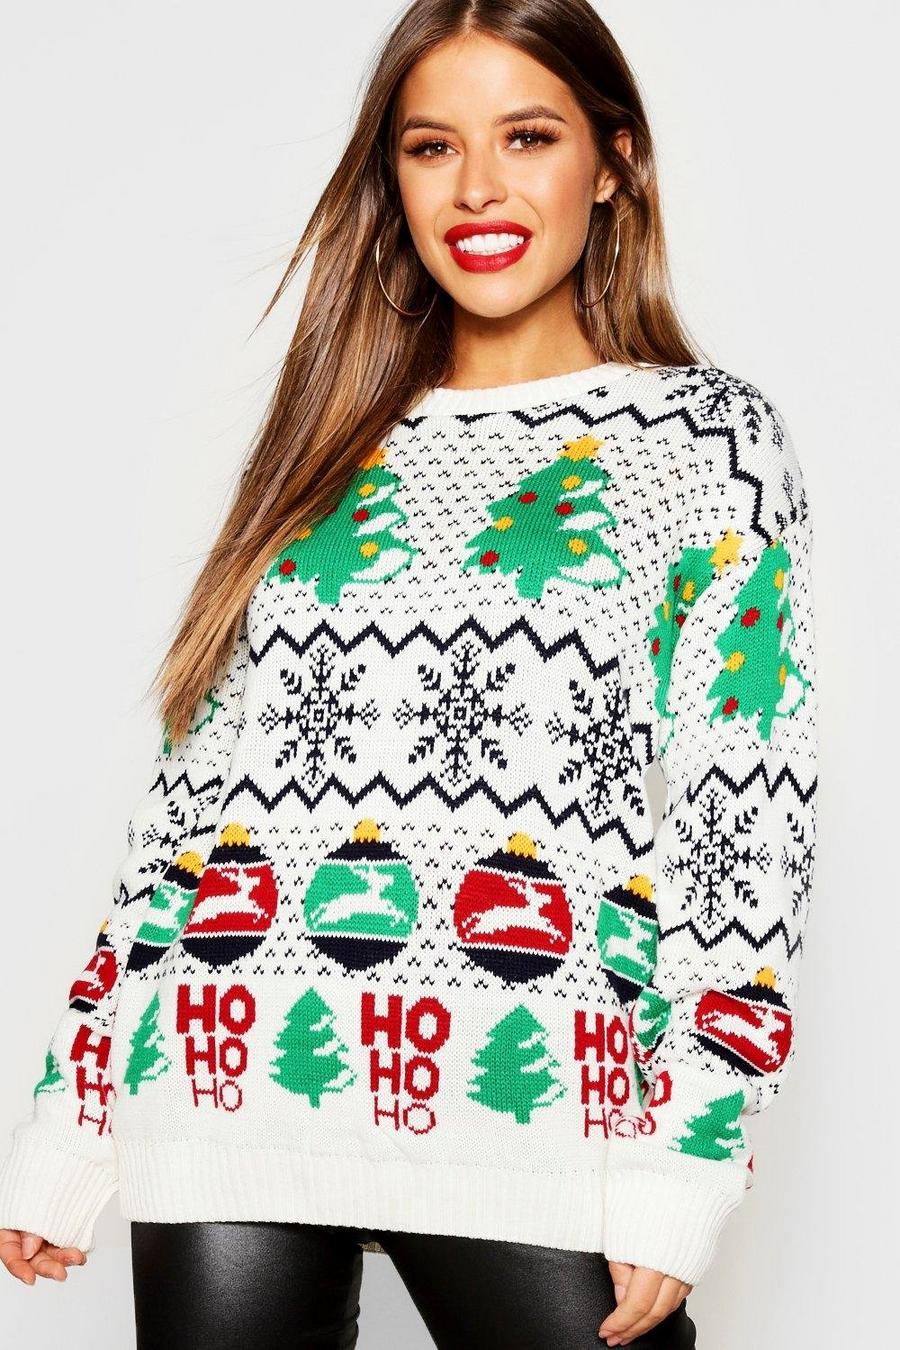 Ecru white Petite Novelty Ho Ho Ho Christmas Sweater